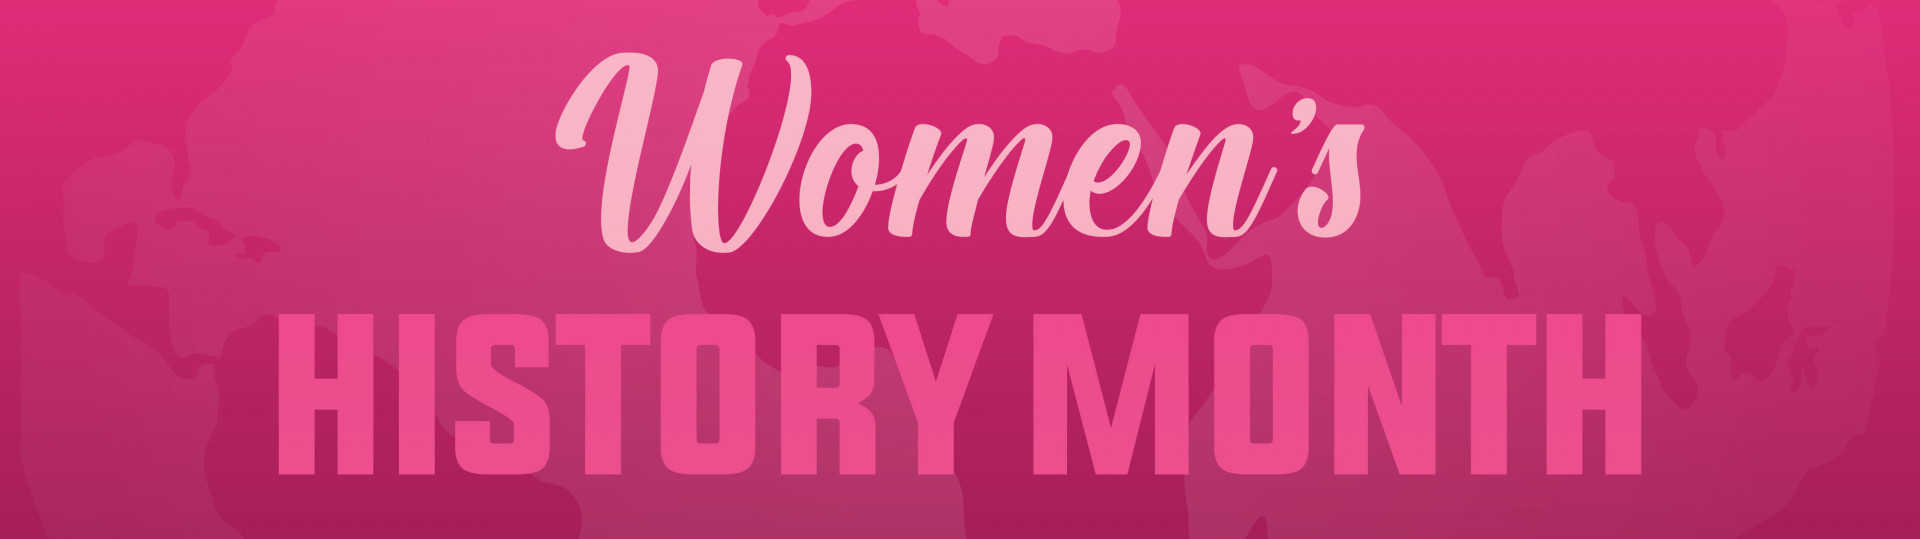 Celebrating Women's History Month @ JLab